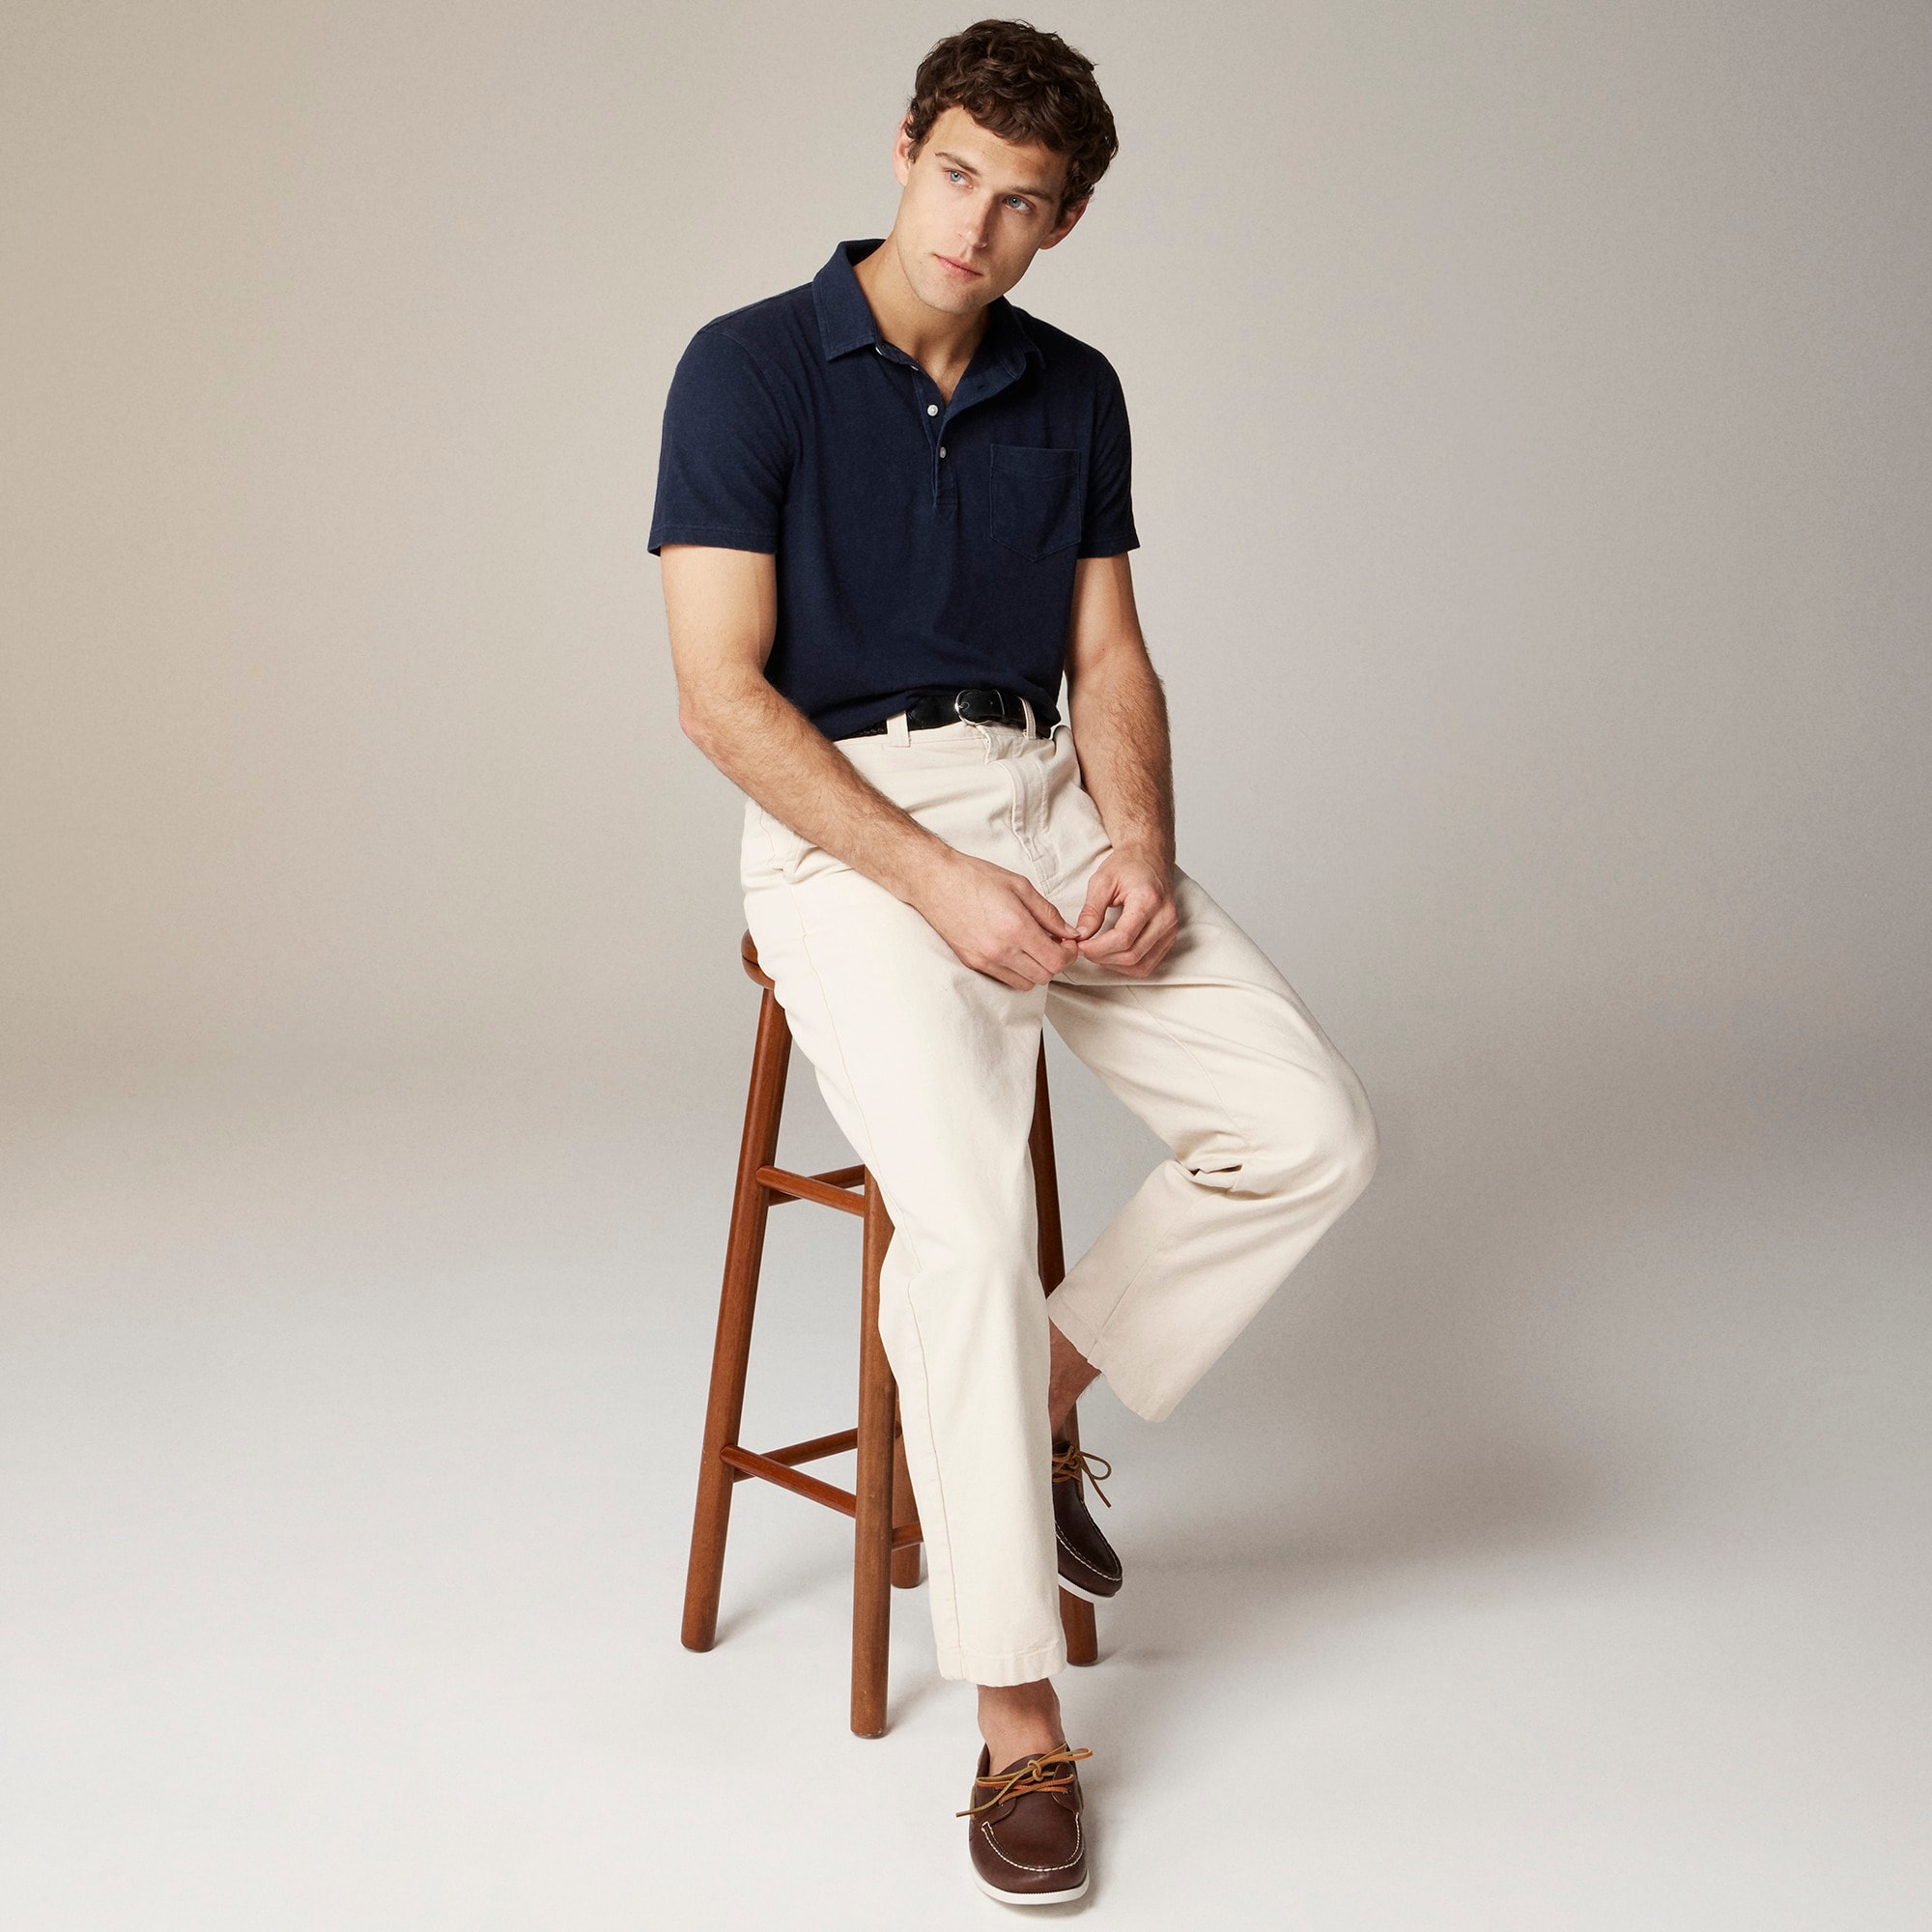  Tall hemp-organic cotton blend polo shirt